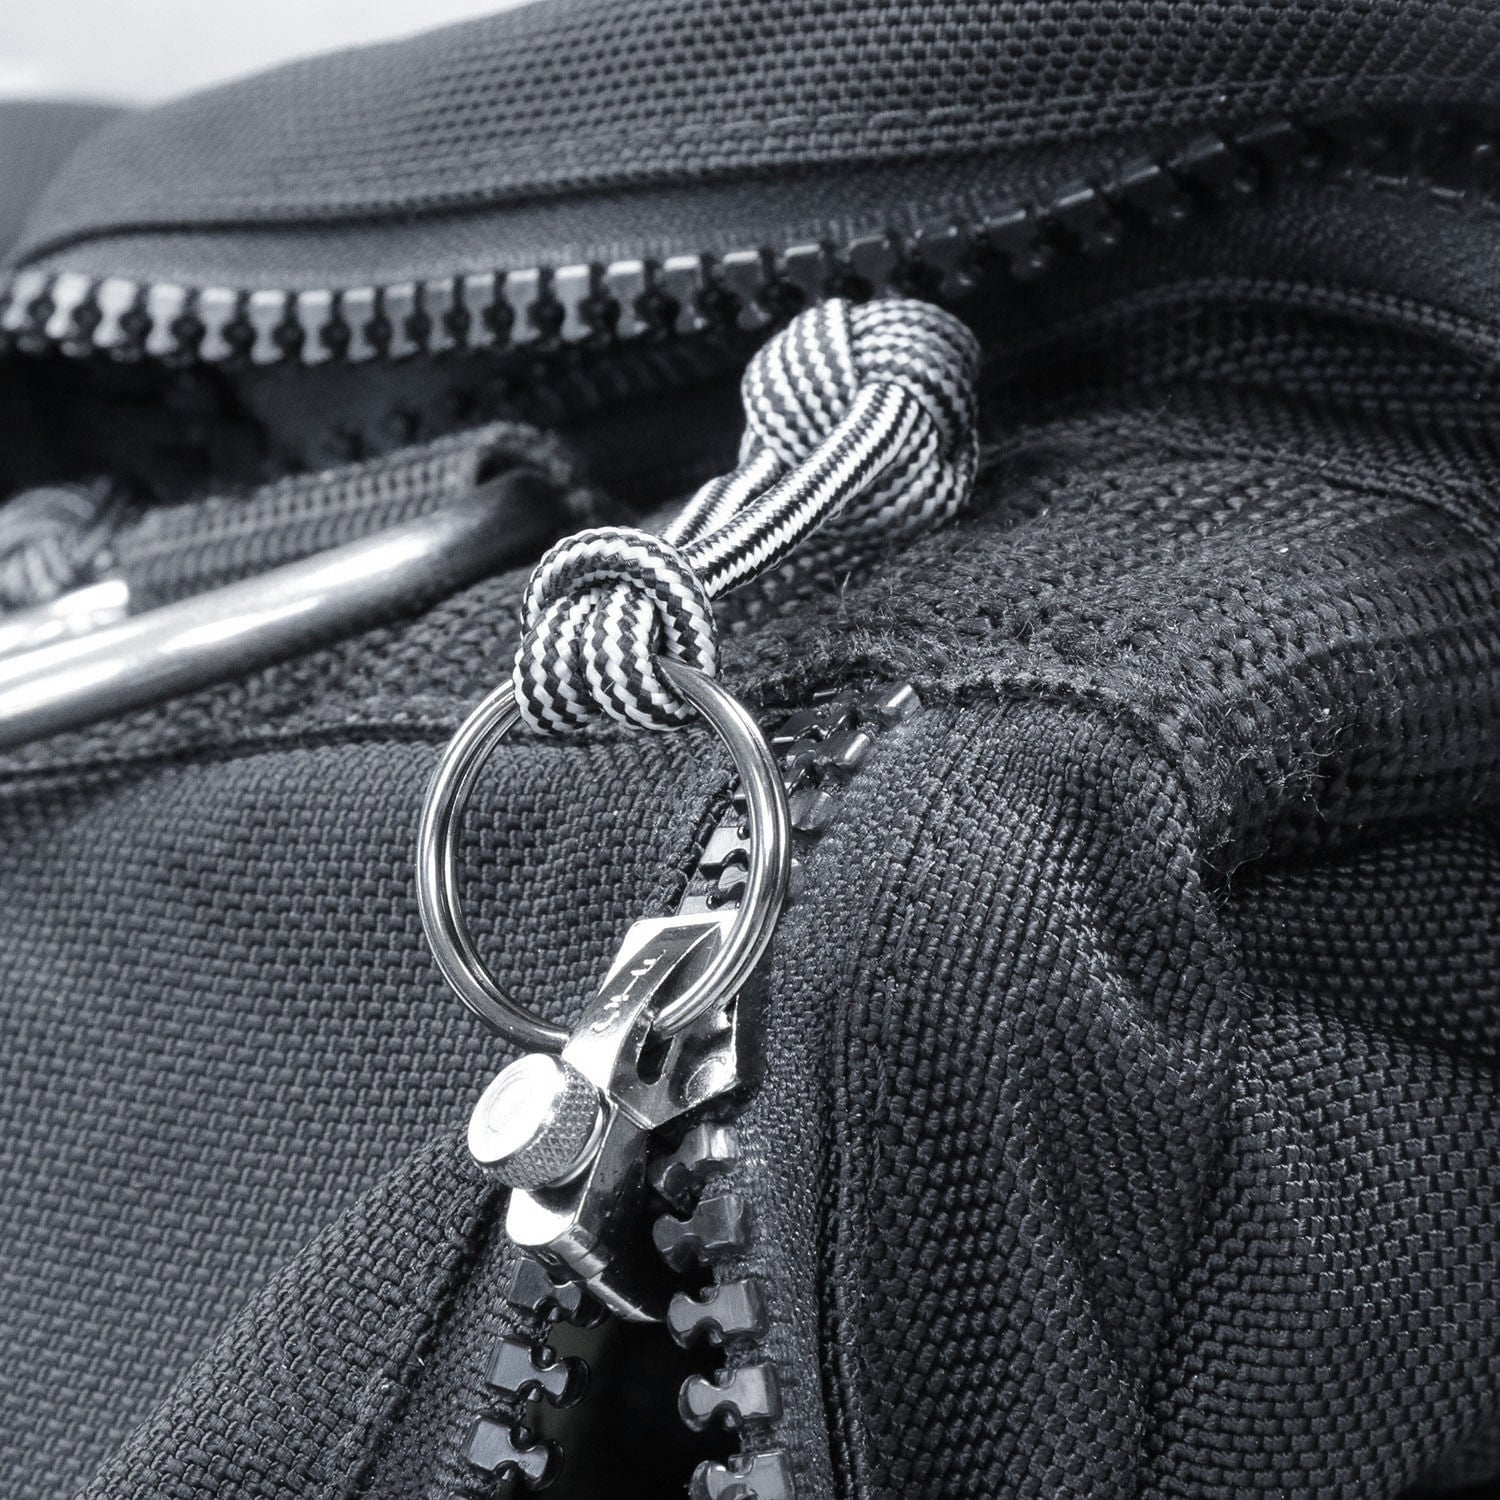 FixnZip Zipper Repair Kits - Lee Valley Tools